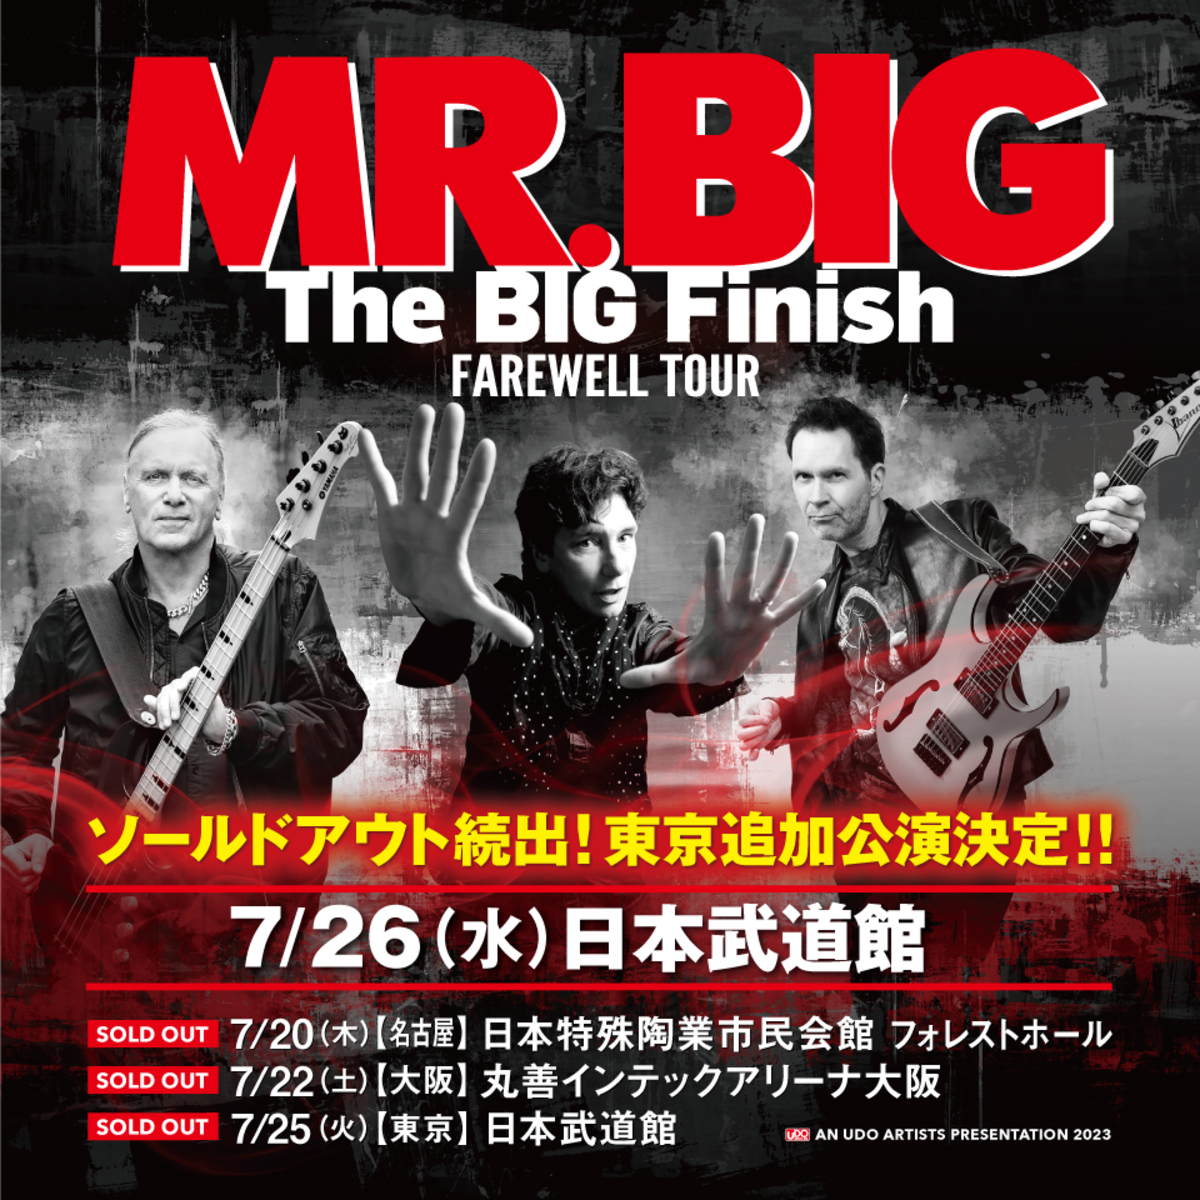 MR.BIG FAREWELL TOUR 7/26（水）武道館チケットチケット